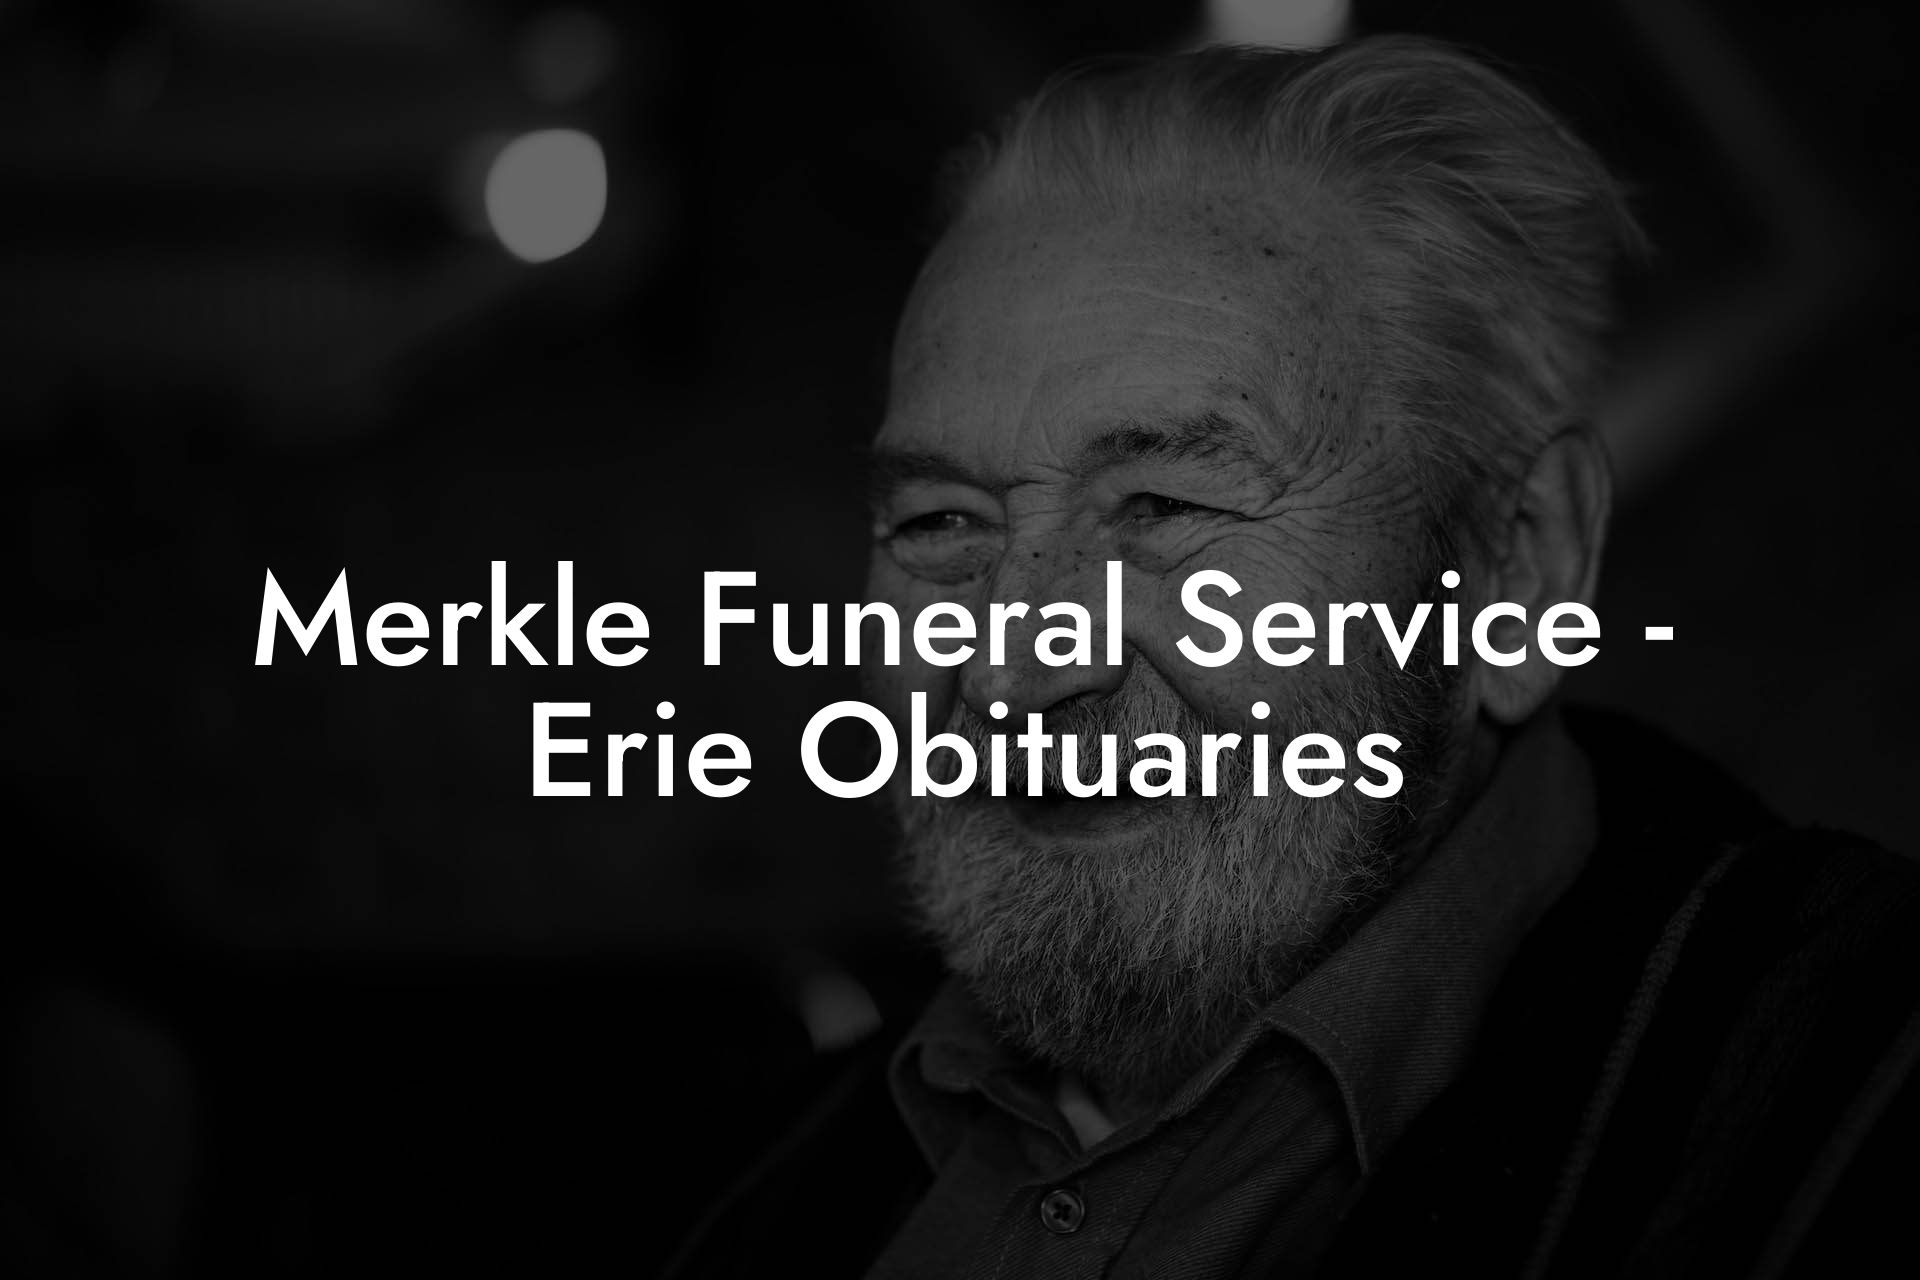 Merkle Funeral Service - Erie Obituaries